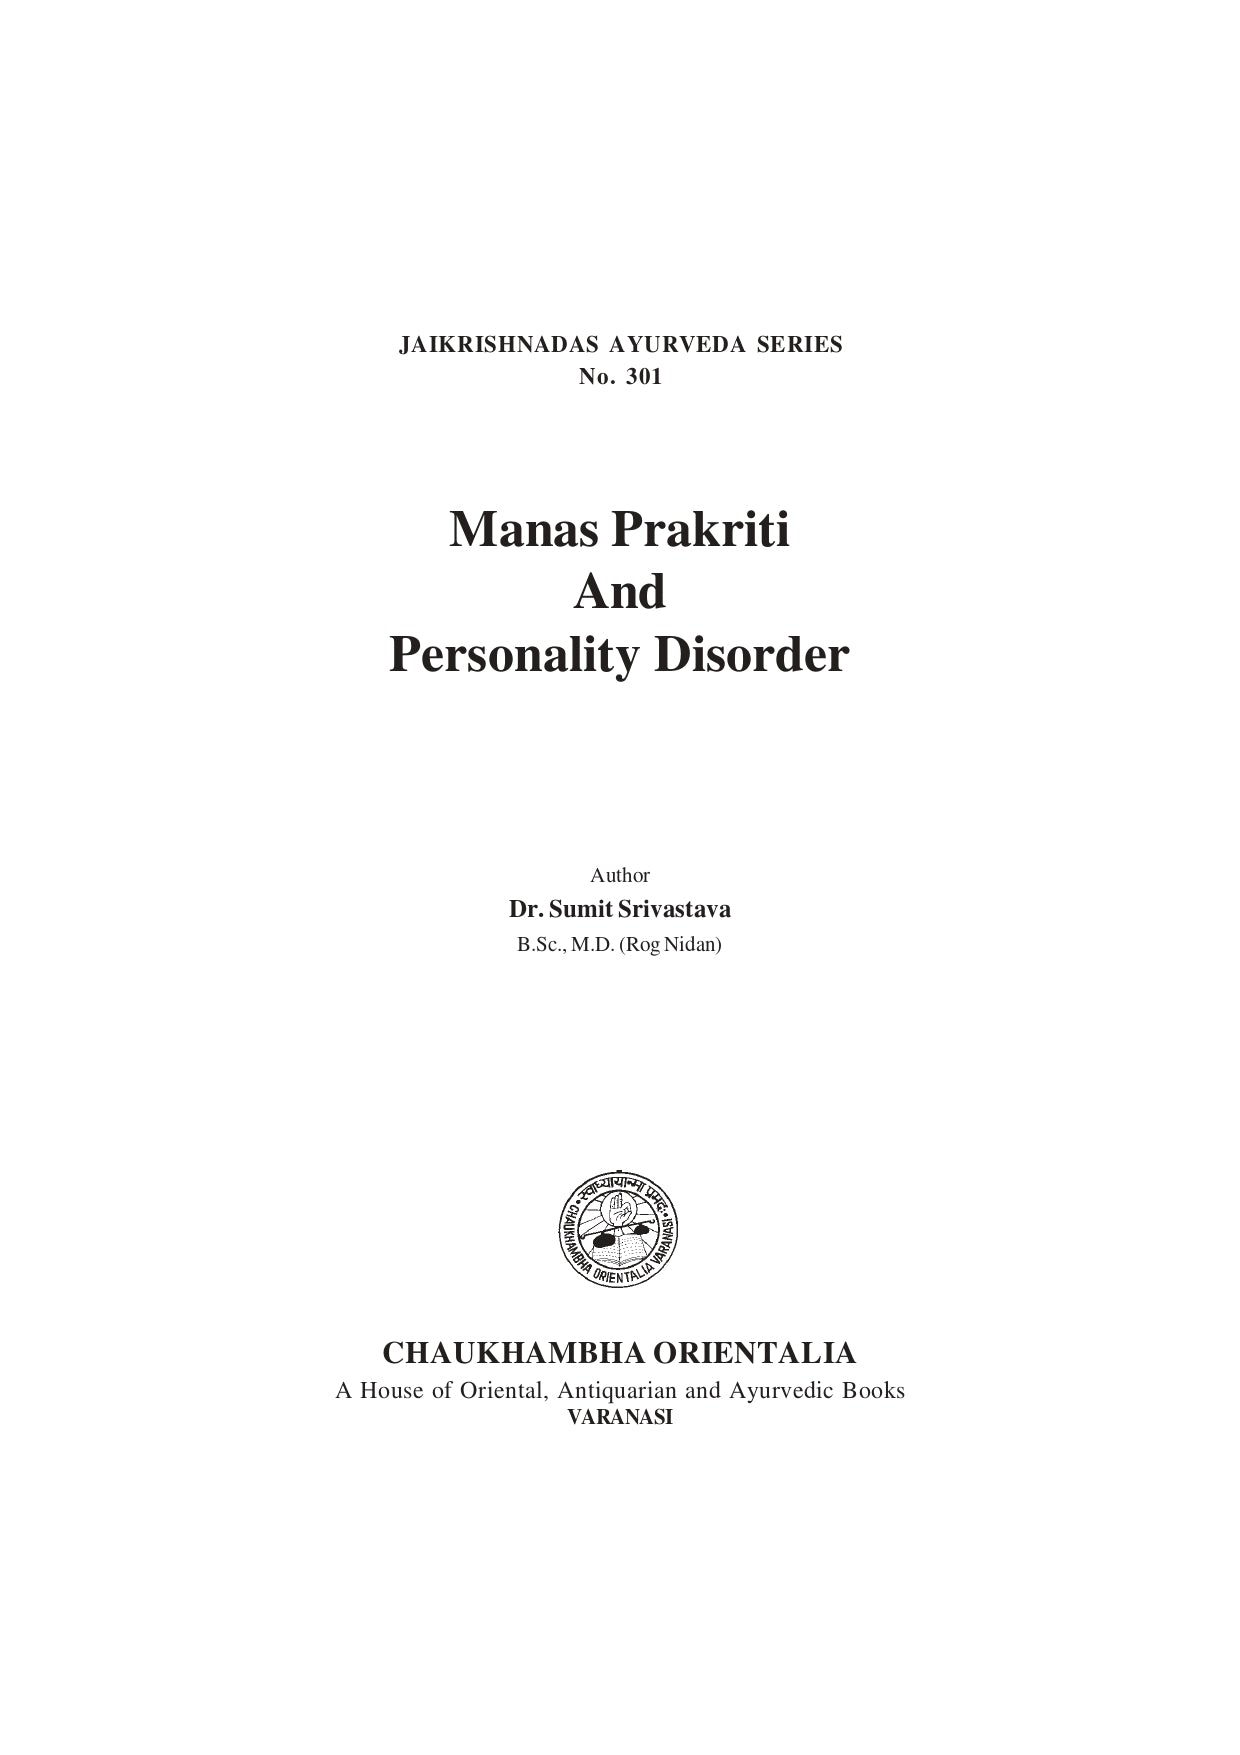 Chaukhambha Orientalia Manas Prakriti and Personality Disorder